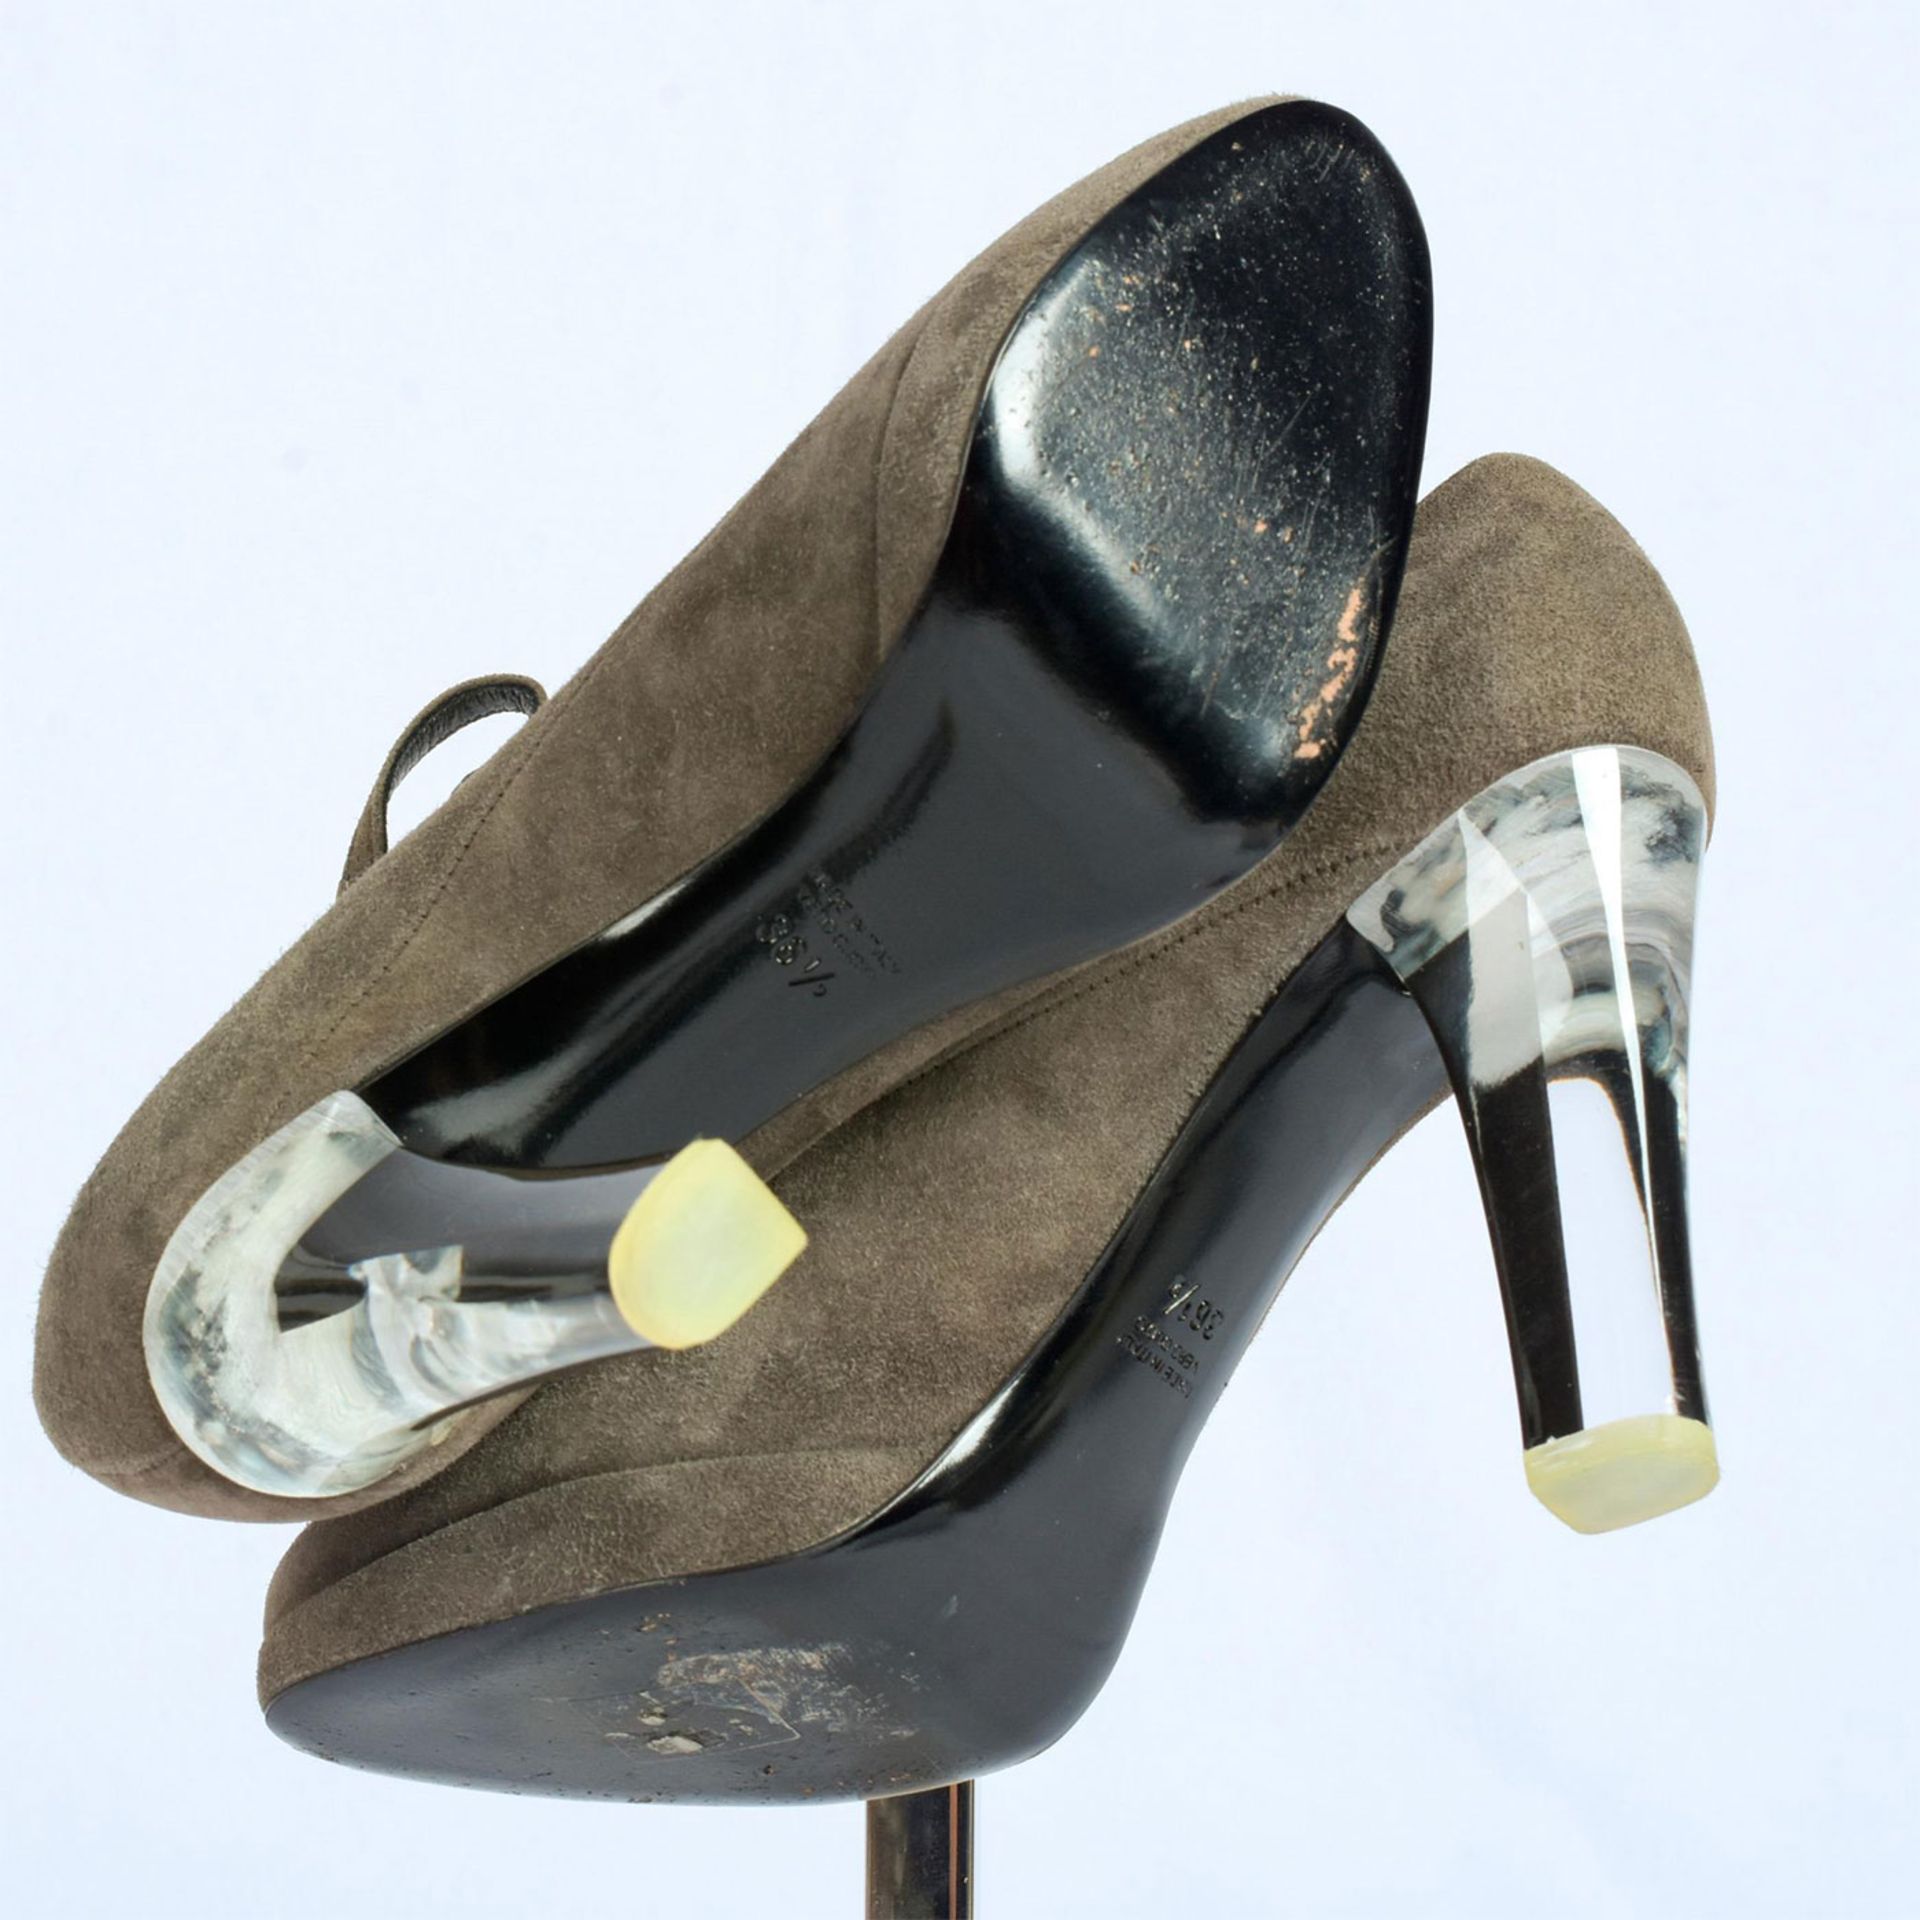 Pair of Nina Ricci Clear Heel Pumps - Image 5 of 6